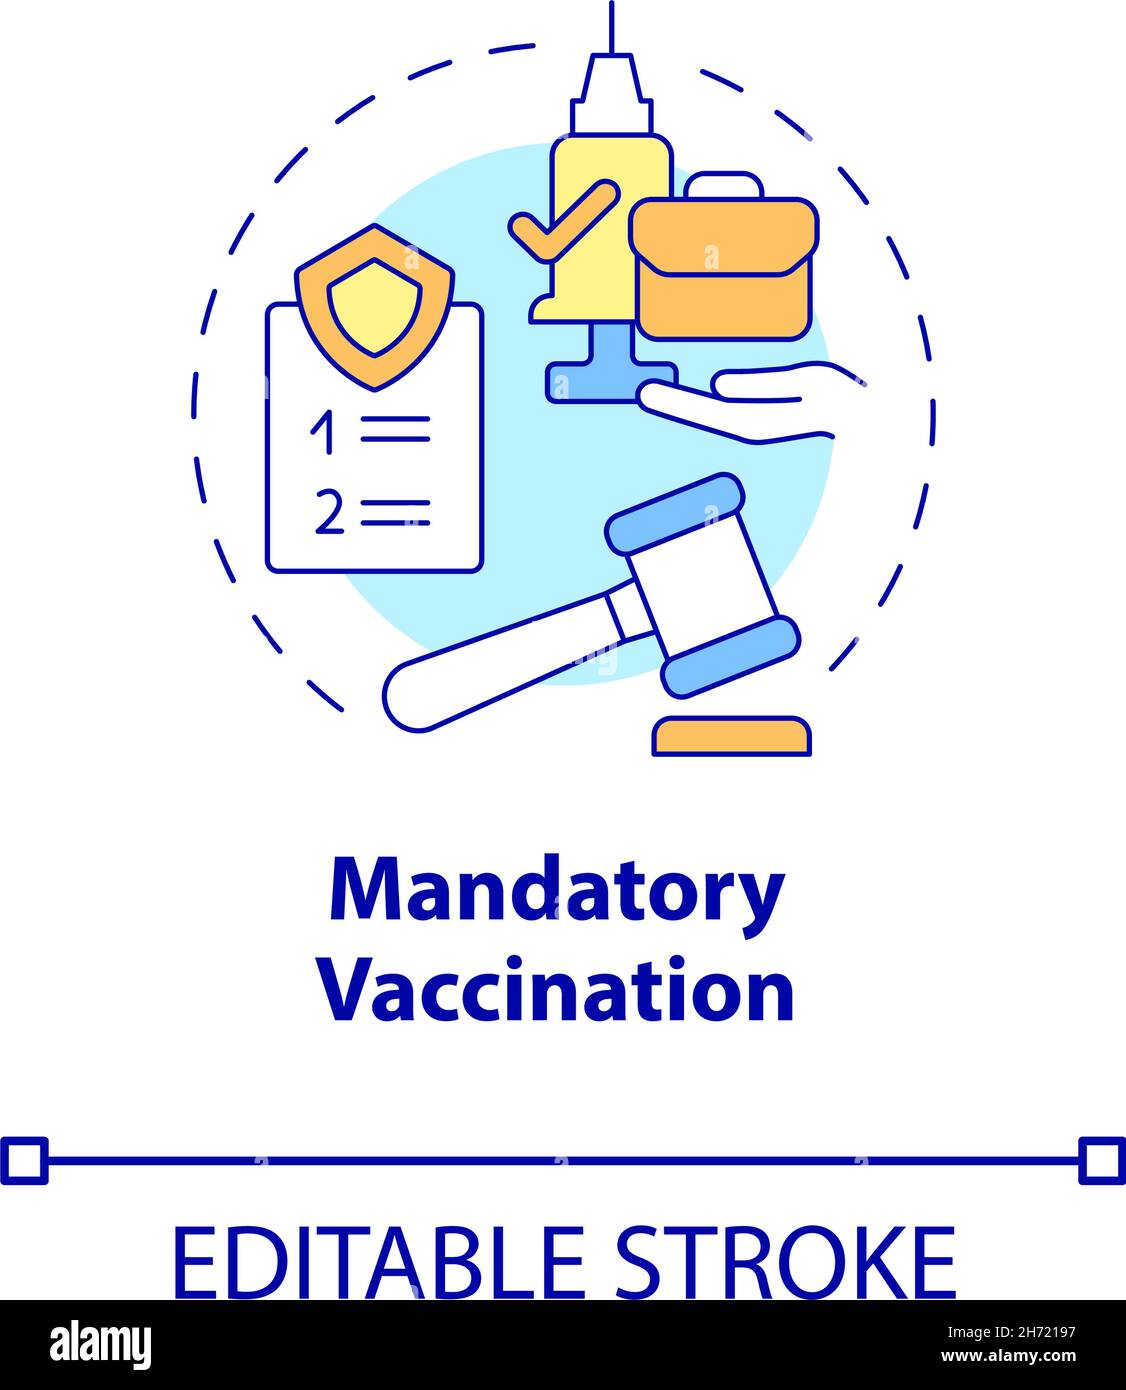 Mandatory vaccination concept icon Stock Vector